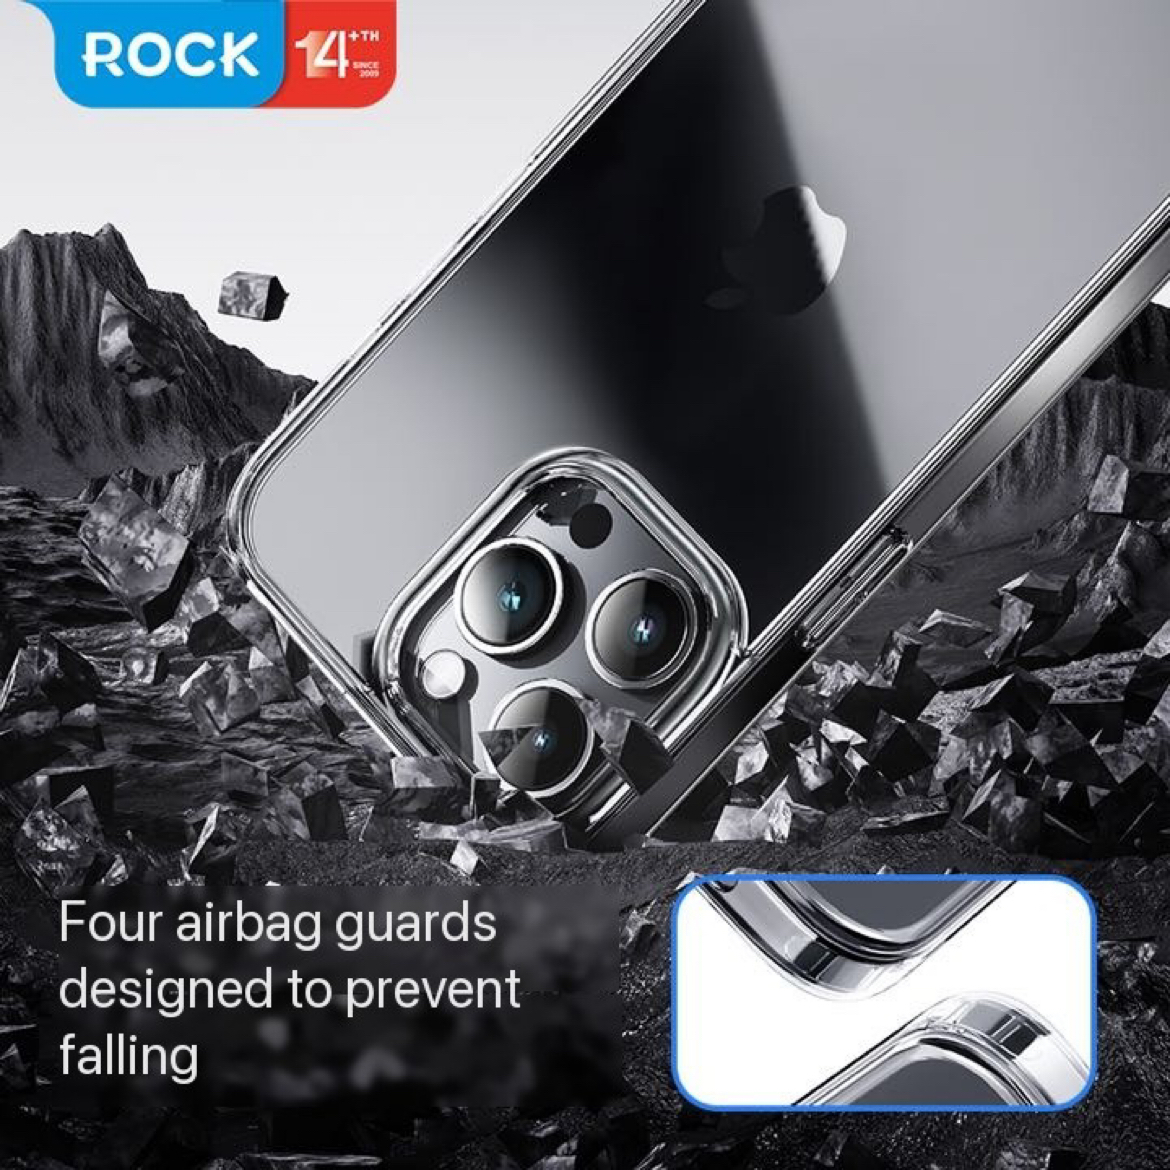 Rock Space Clear transparent skal till iPhone 15